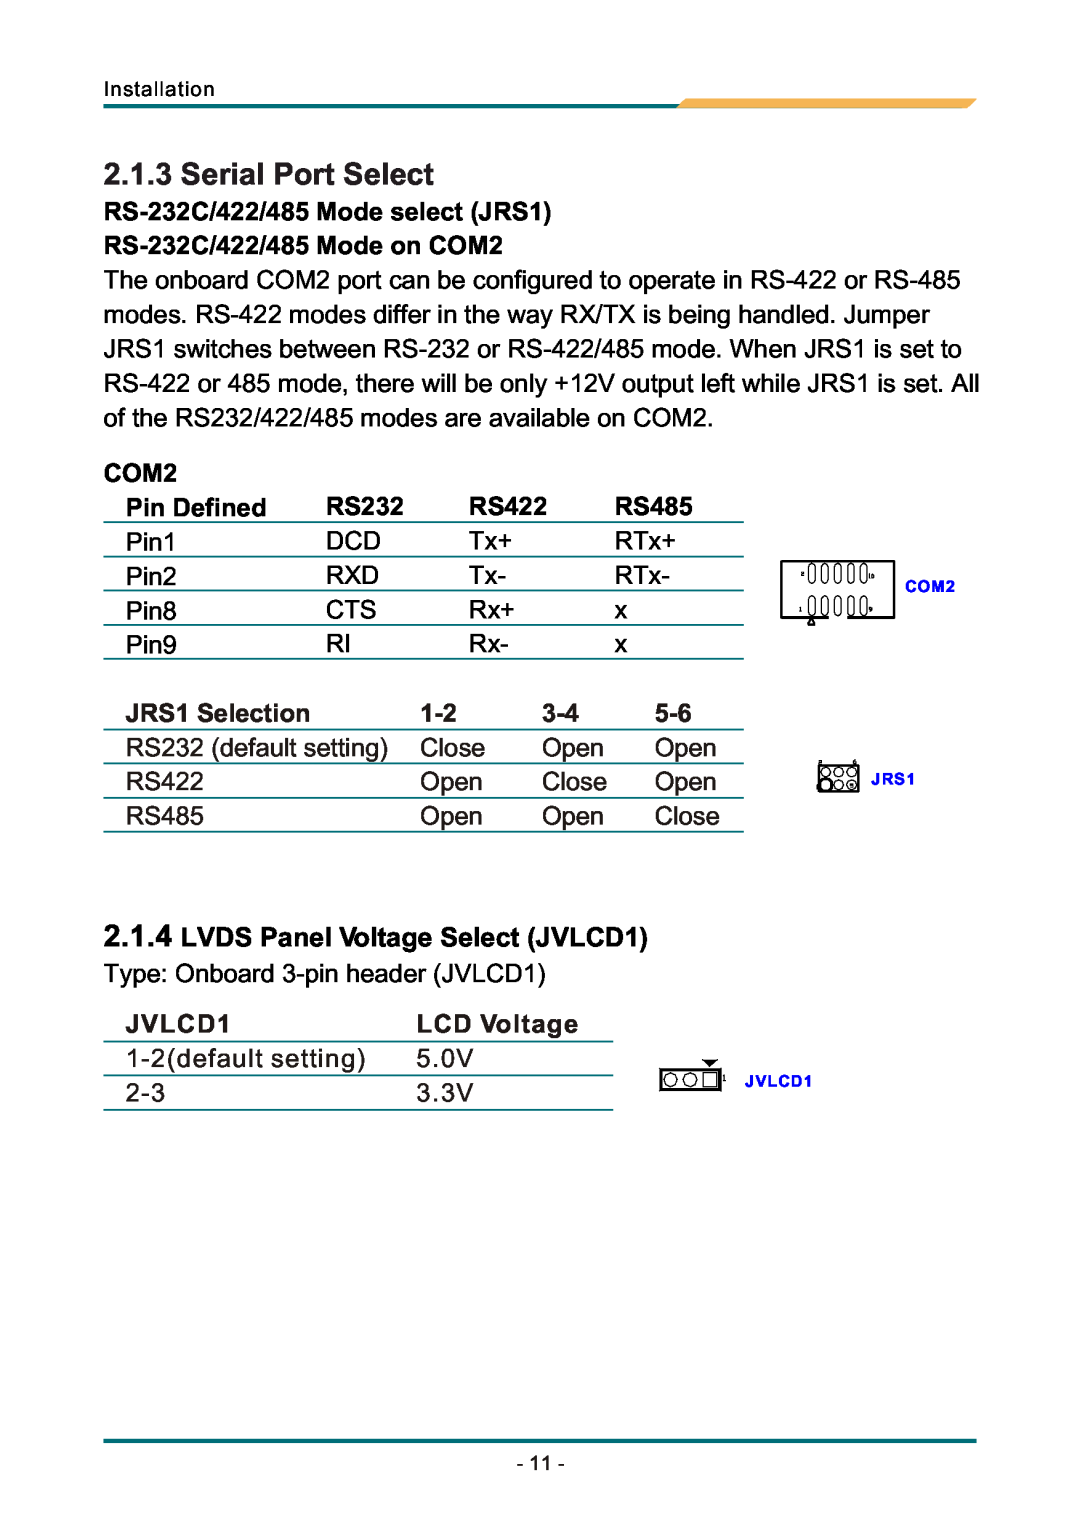 AMD SBX-5363 manual Serial Port Select, JRS1 Selection, LCD Voltage, LVDS Panel Voltage Select JVLCD1 